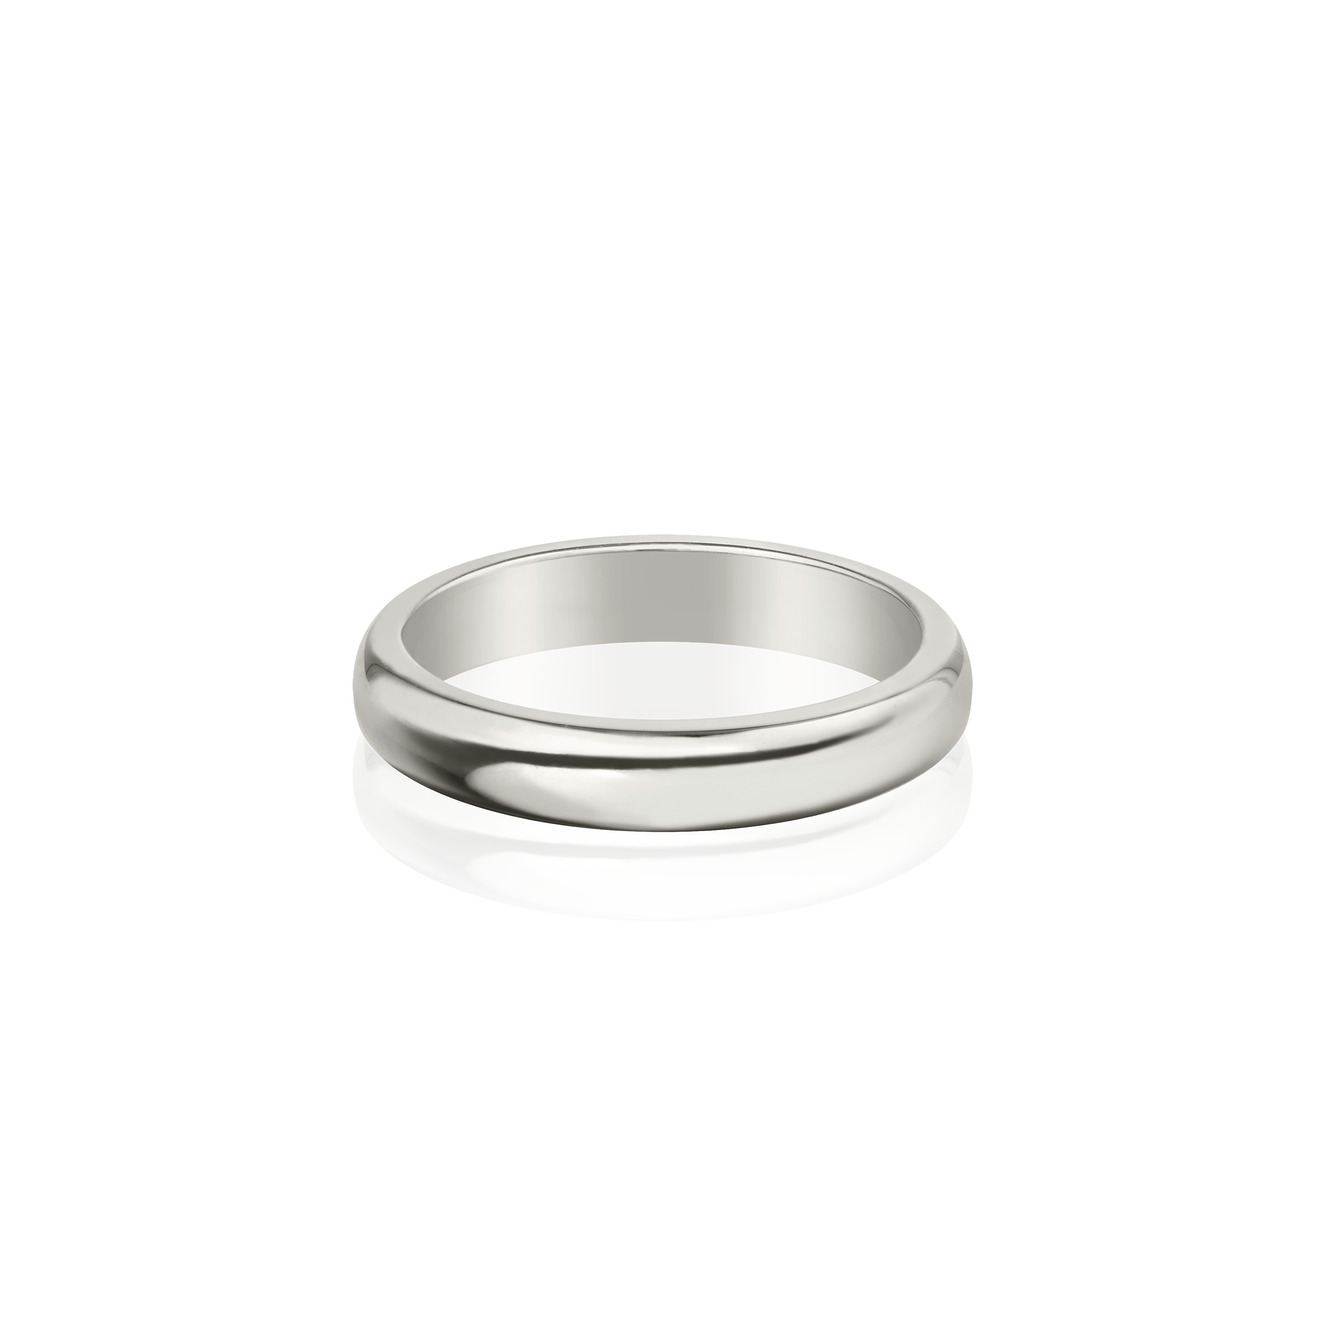 Vertigo Jewellery Lab Фаланговое кольцо из серебра ESSENTIALS vertigo jewellery lab кольцо сleoptr ladybug ring из серебра с речным жемчугом